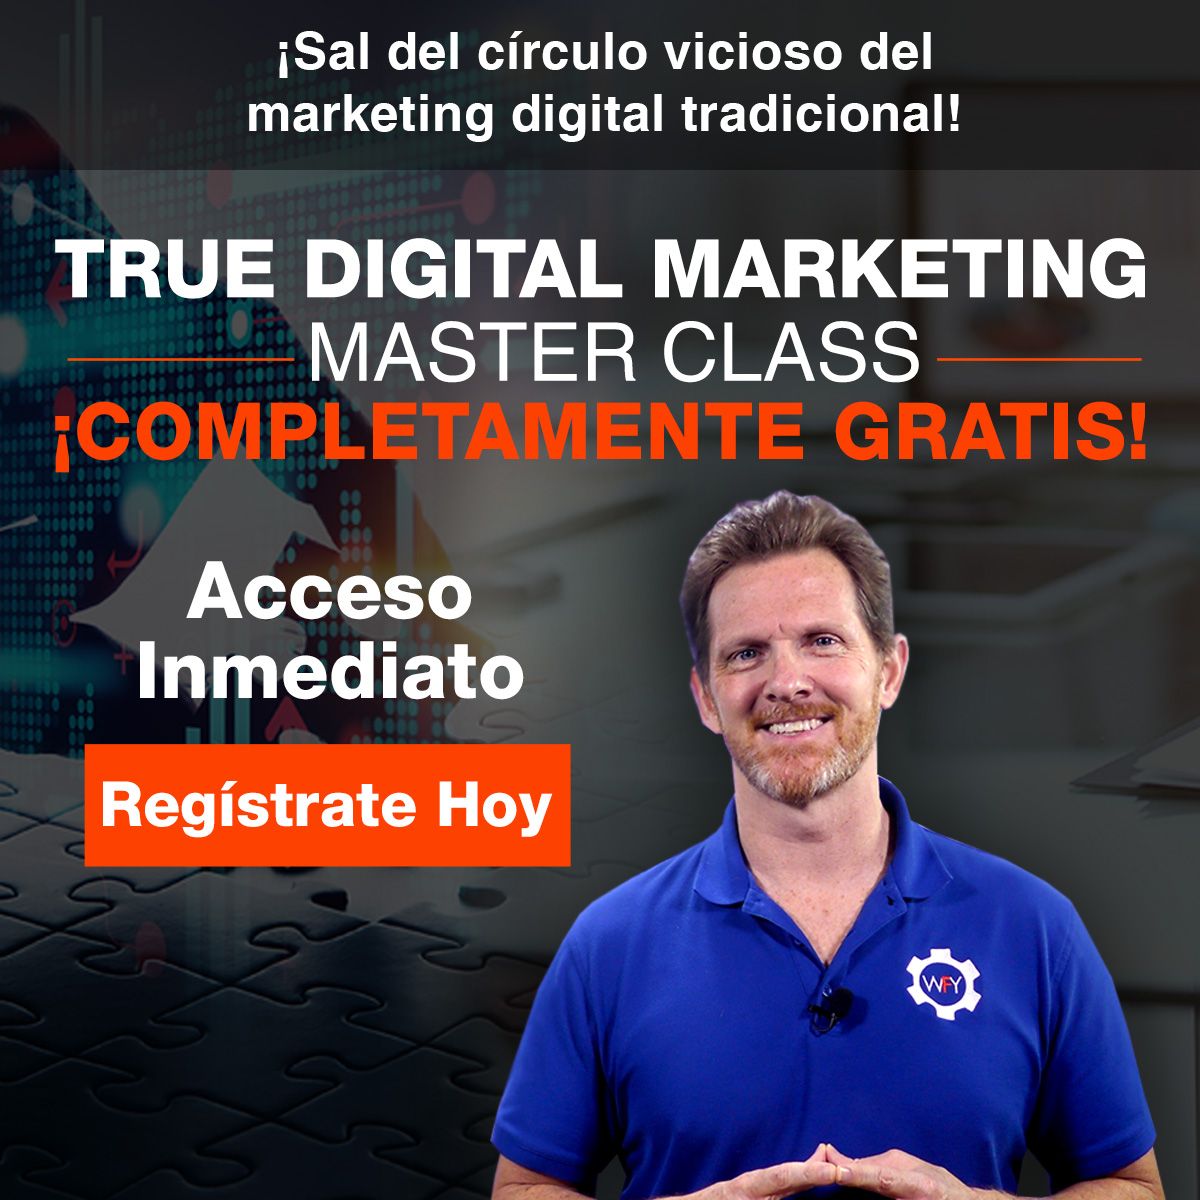 True Digital Marketing Master Class ¡Completamente Gratis!